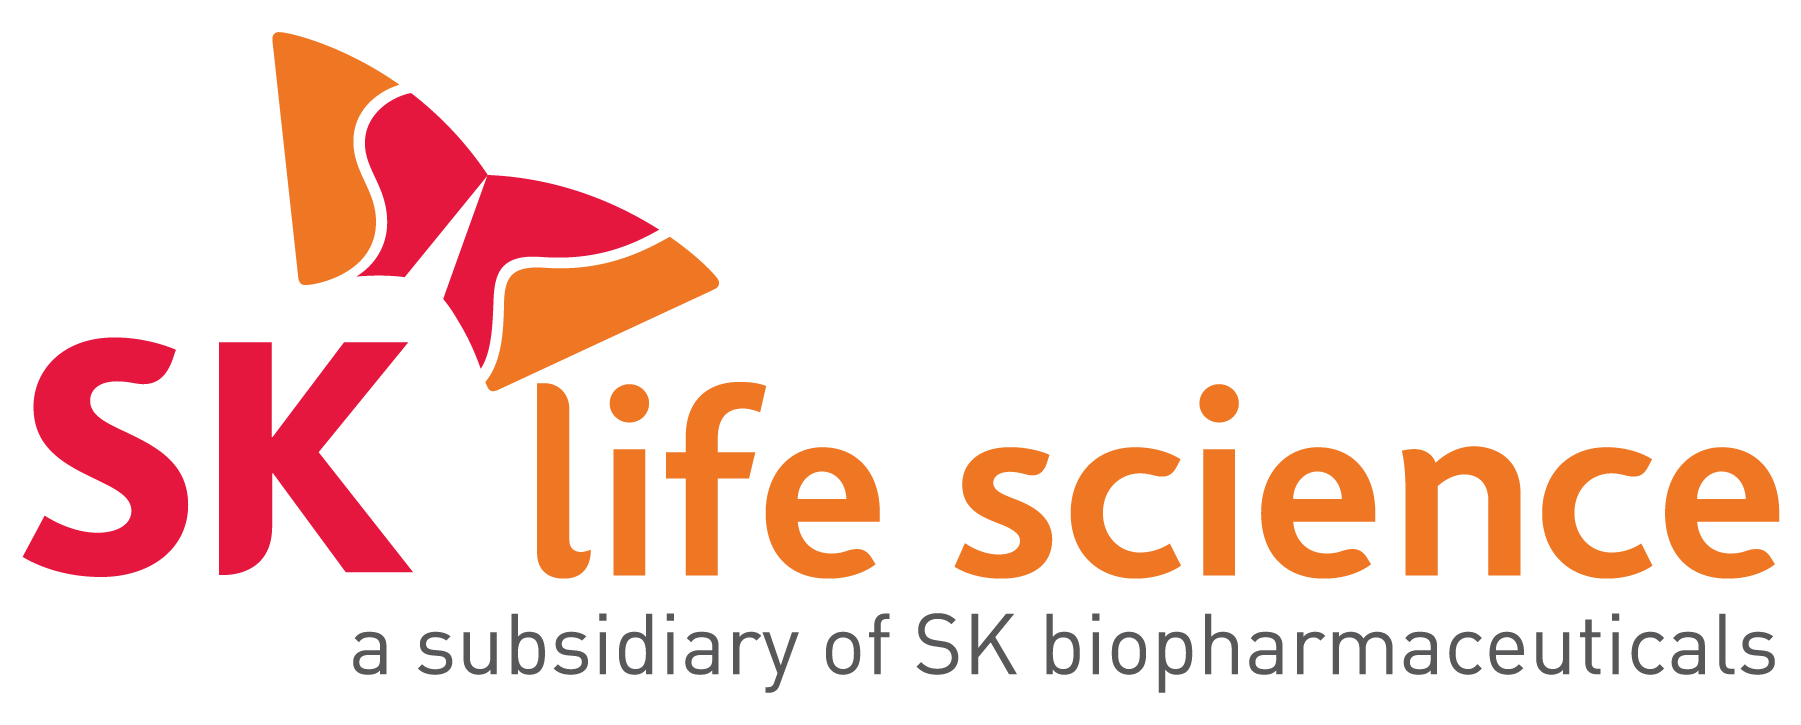 Cambridge Life Sciences Ltd - The Company